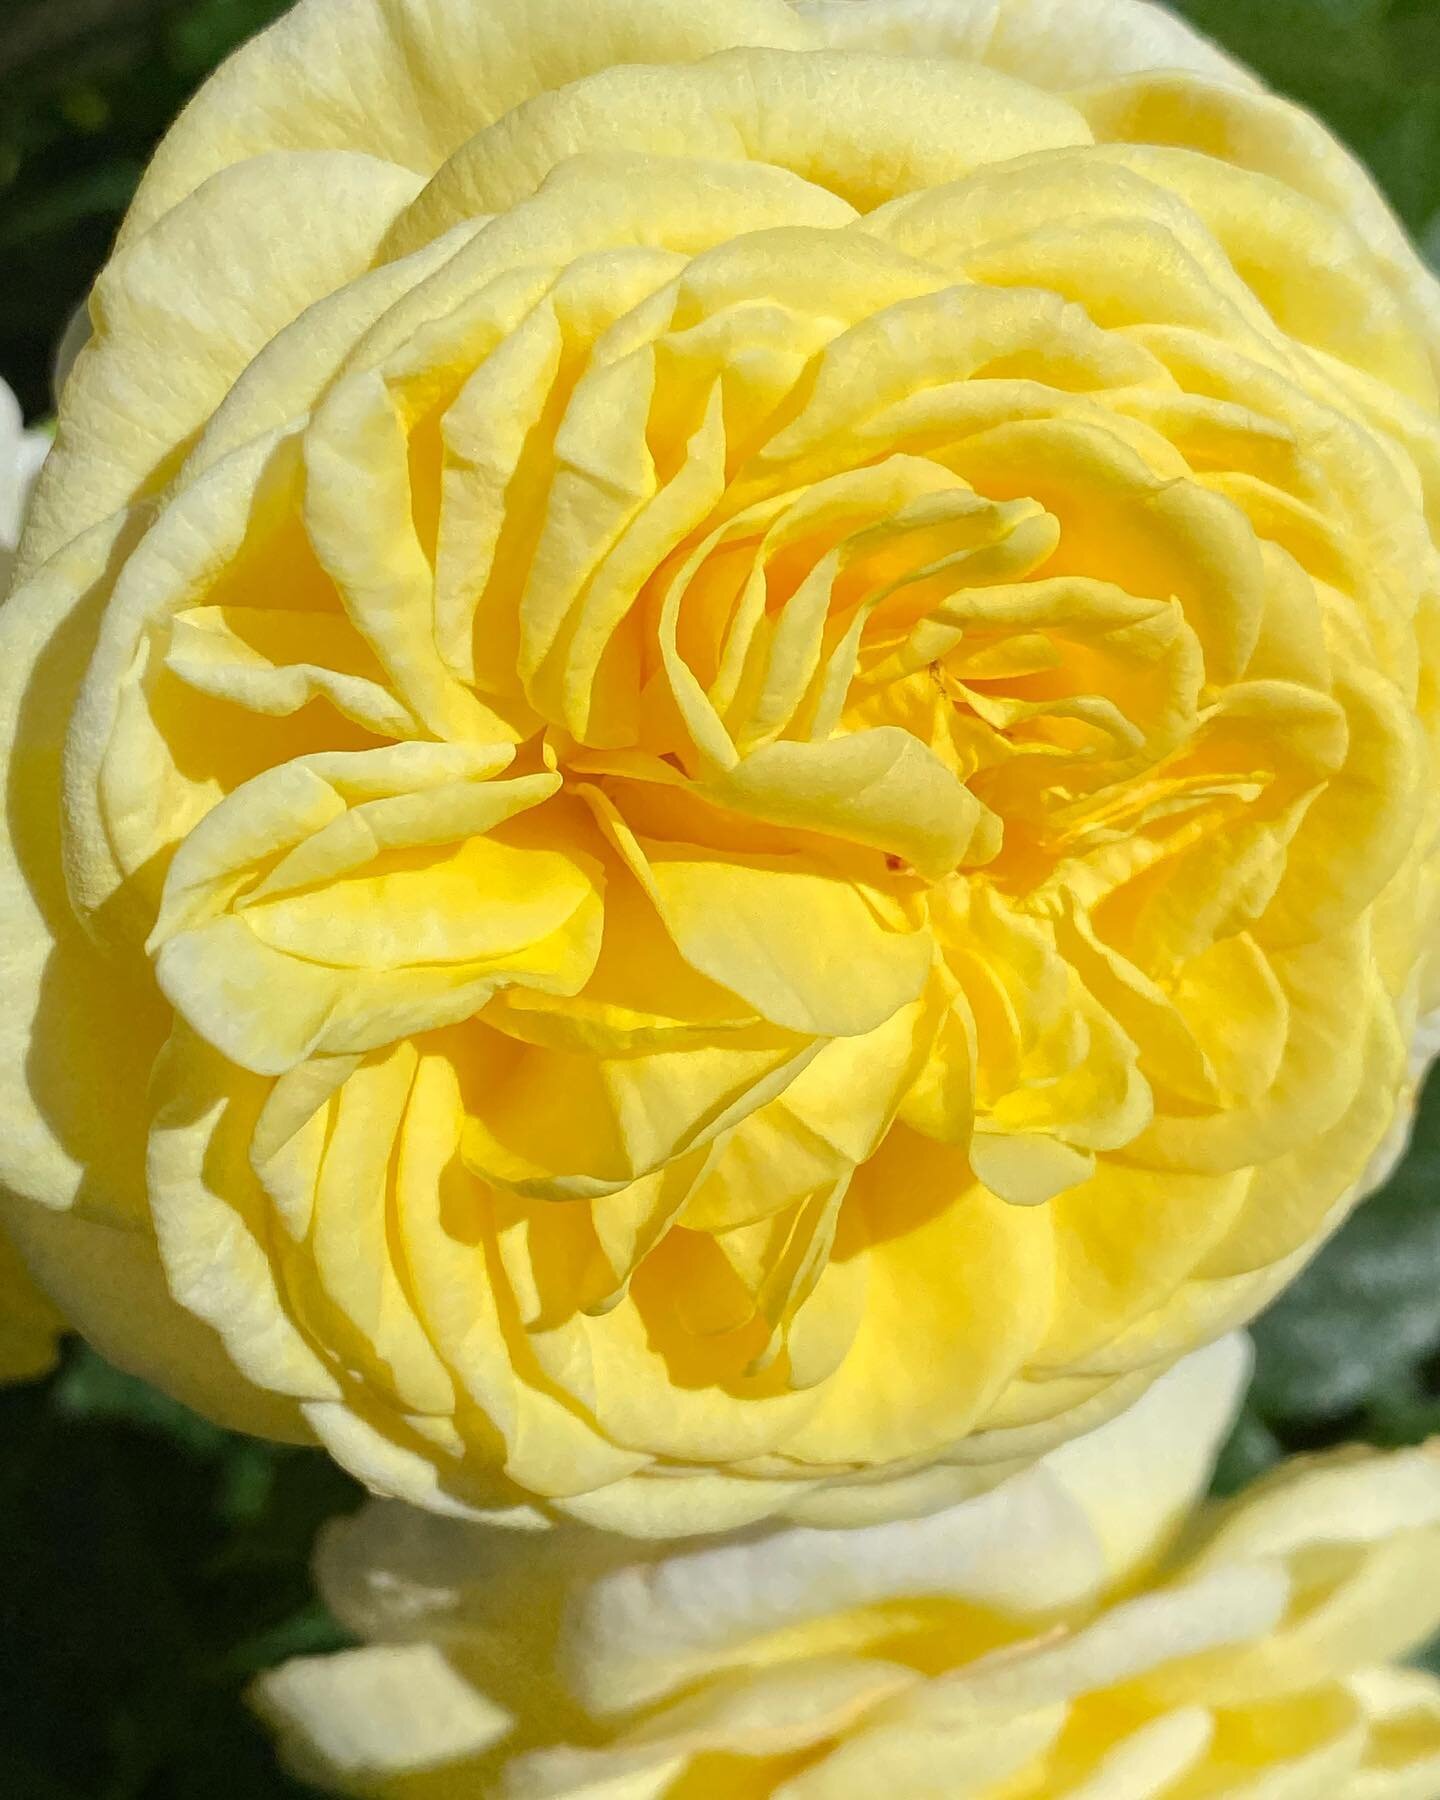 A lemon coloured rose called #juliachild. Is that not the perfect rise for the lemonade lady?  #lemon #lemonade #makebakegrow #bctastesbetter #local #604foood #farmersmarket #rose #beauty